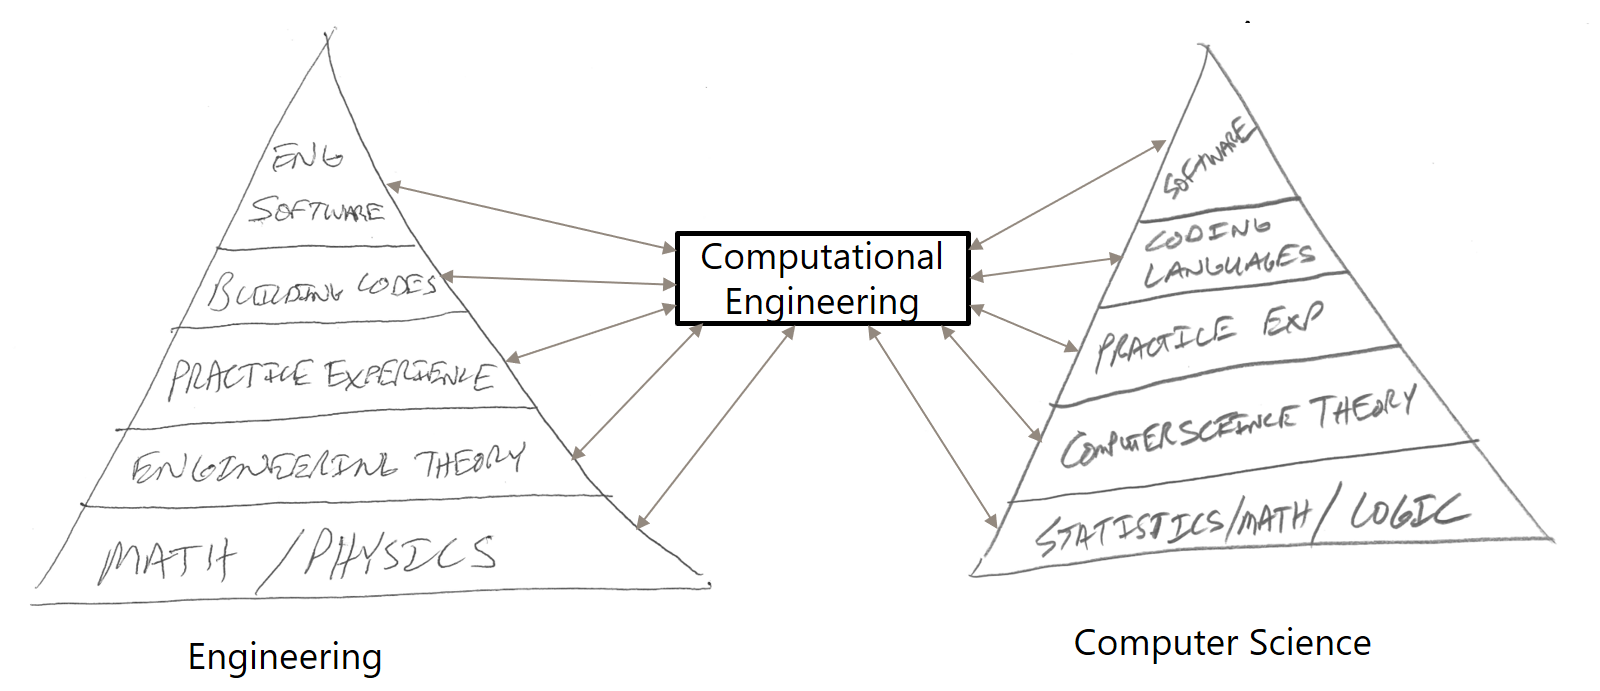 Two Pyramids of Computational Engineering Skills